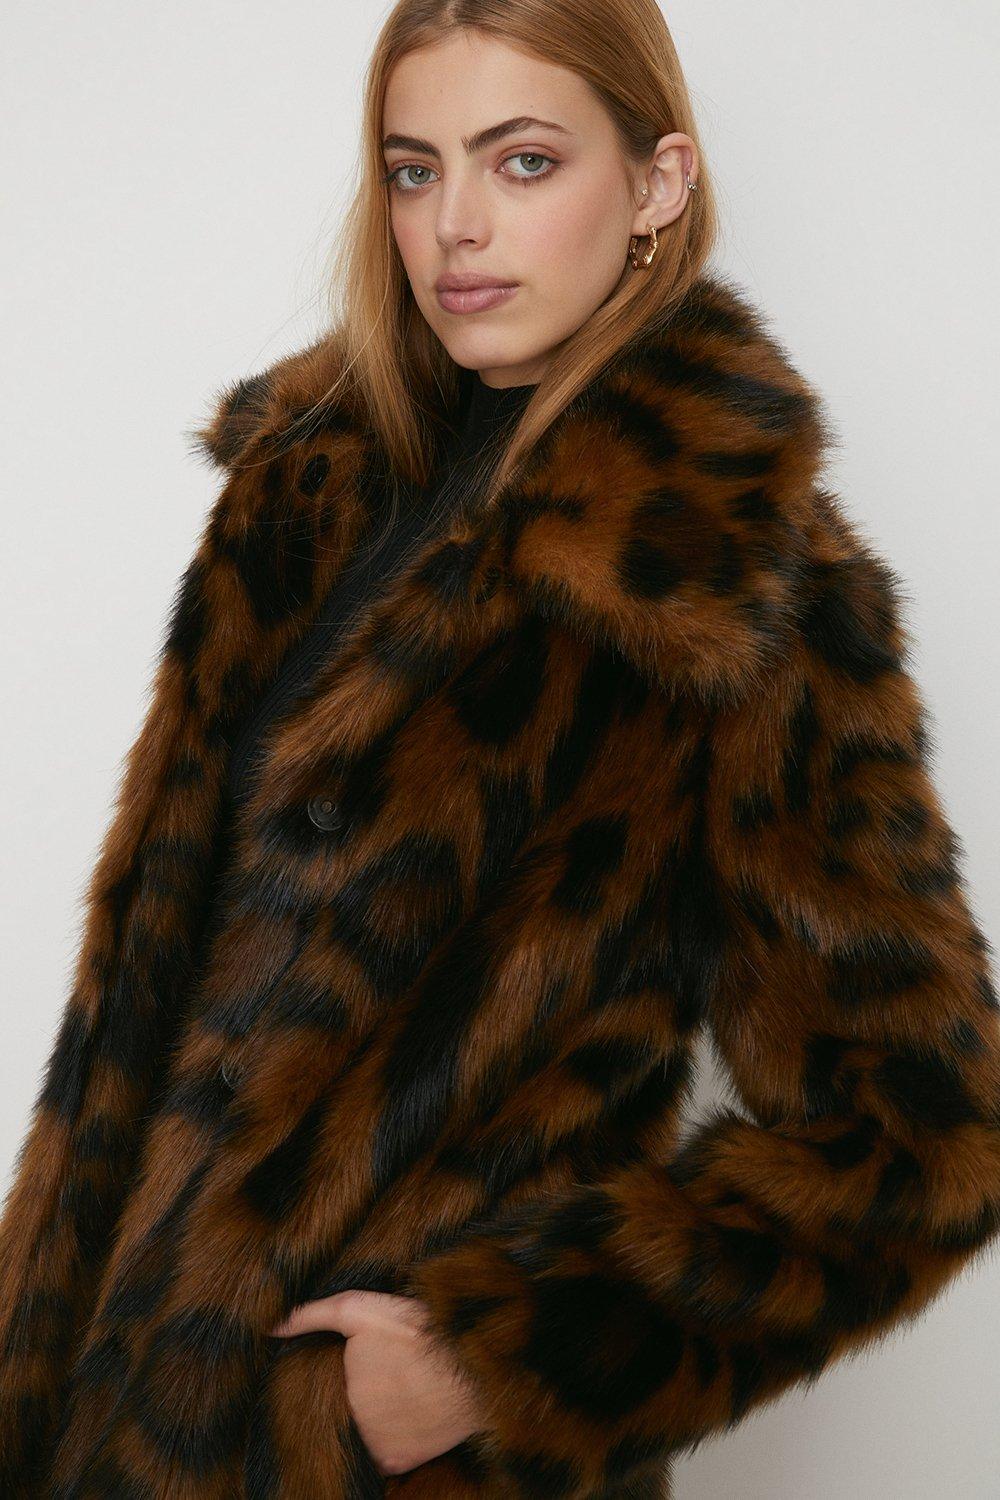 Oasis Rachel Stevens Collared Longline Animal Faux Fur Coat | Debenhams